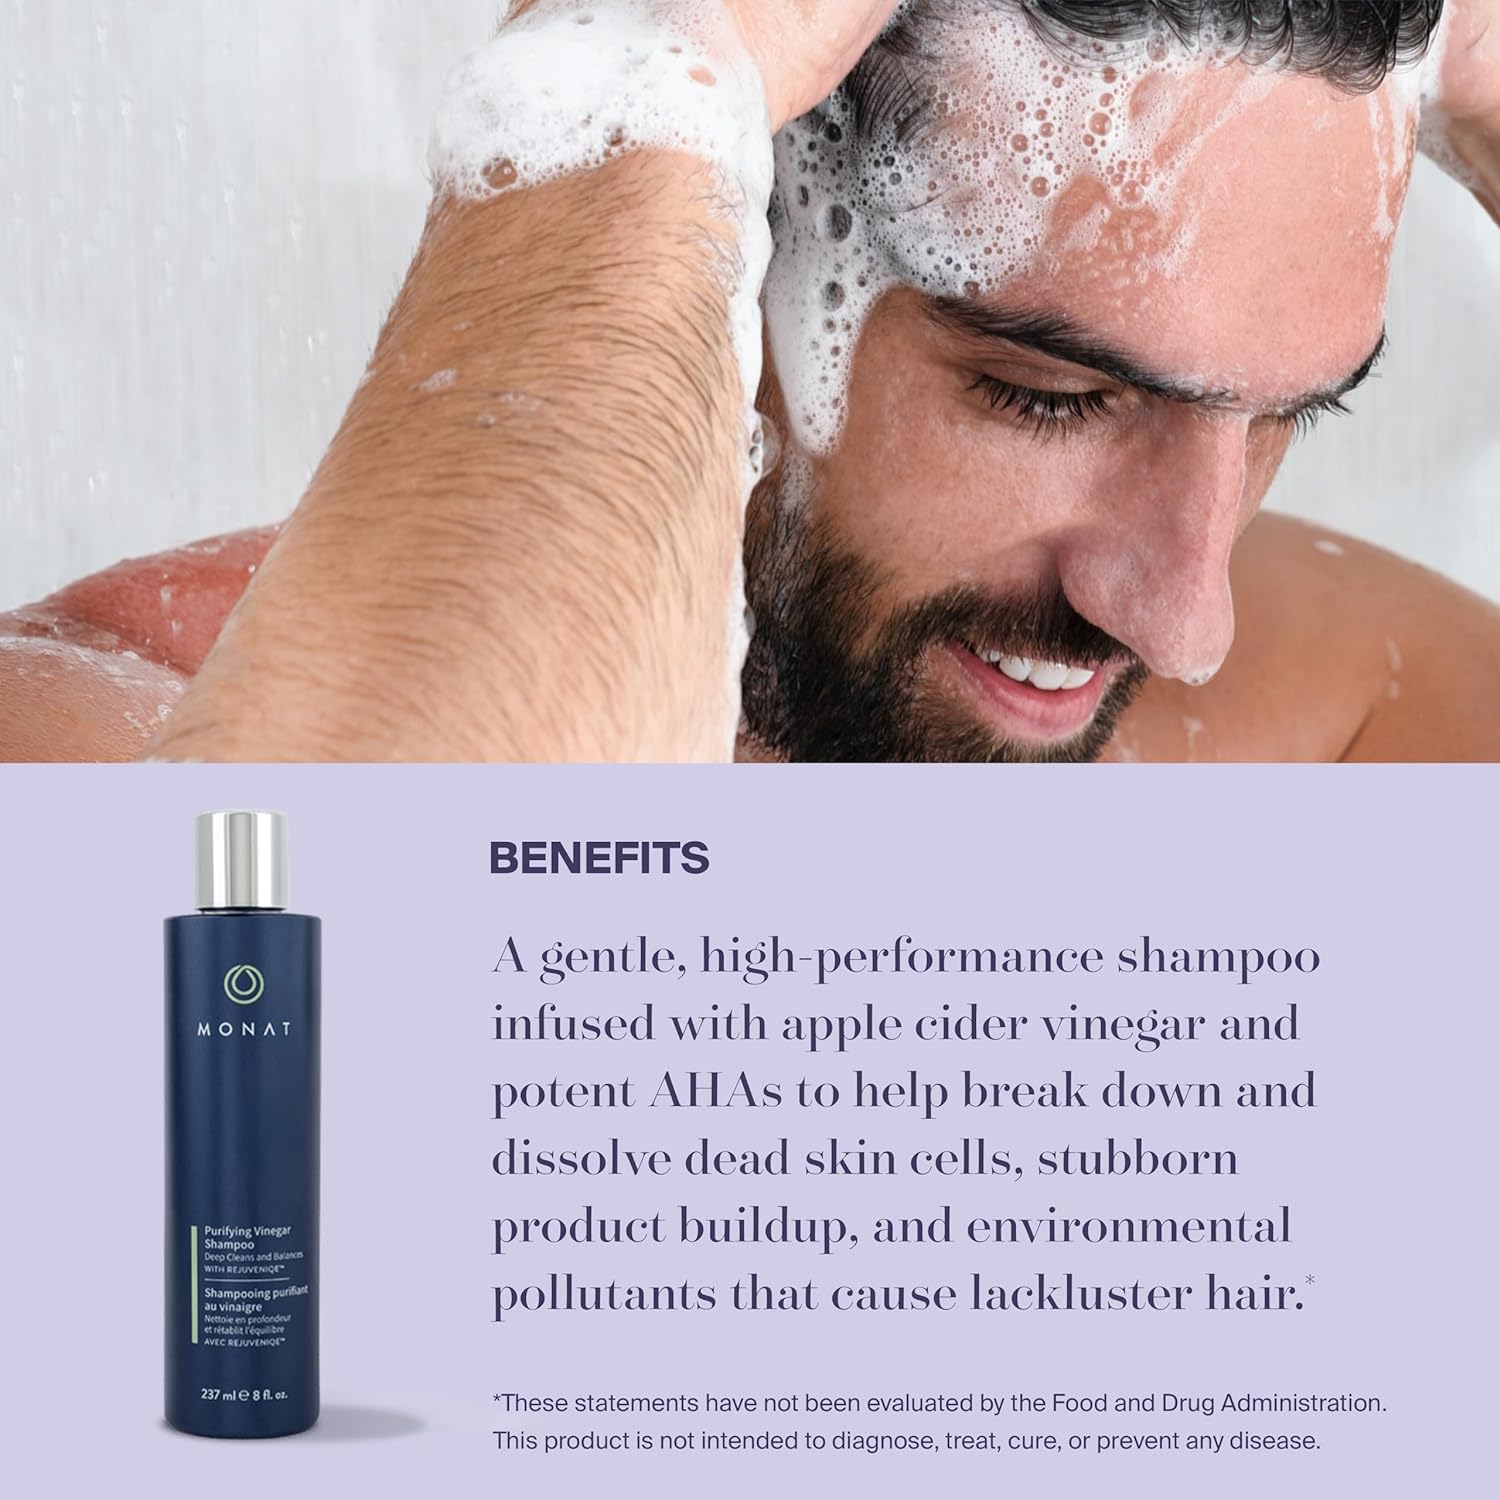 MONAT Purifying Vinegar Shampoo - Gentle High-Performance Apple Cider Vinegar Shampoo & Potent AHA Natural Shampoo Deeply Cleanses, Purifies & Hydrates Hair - Net Wt. 237 ml / 8 fl. oz. : Beauty & Personal Care